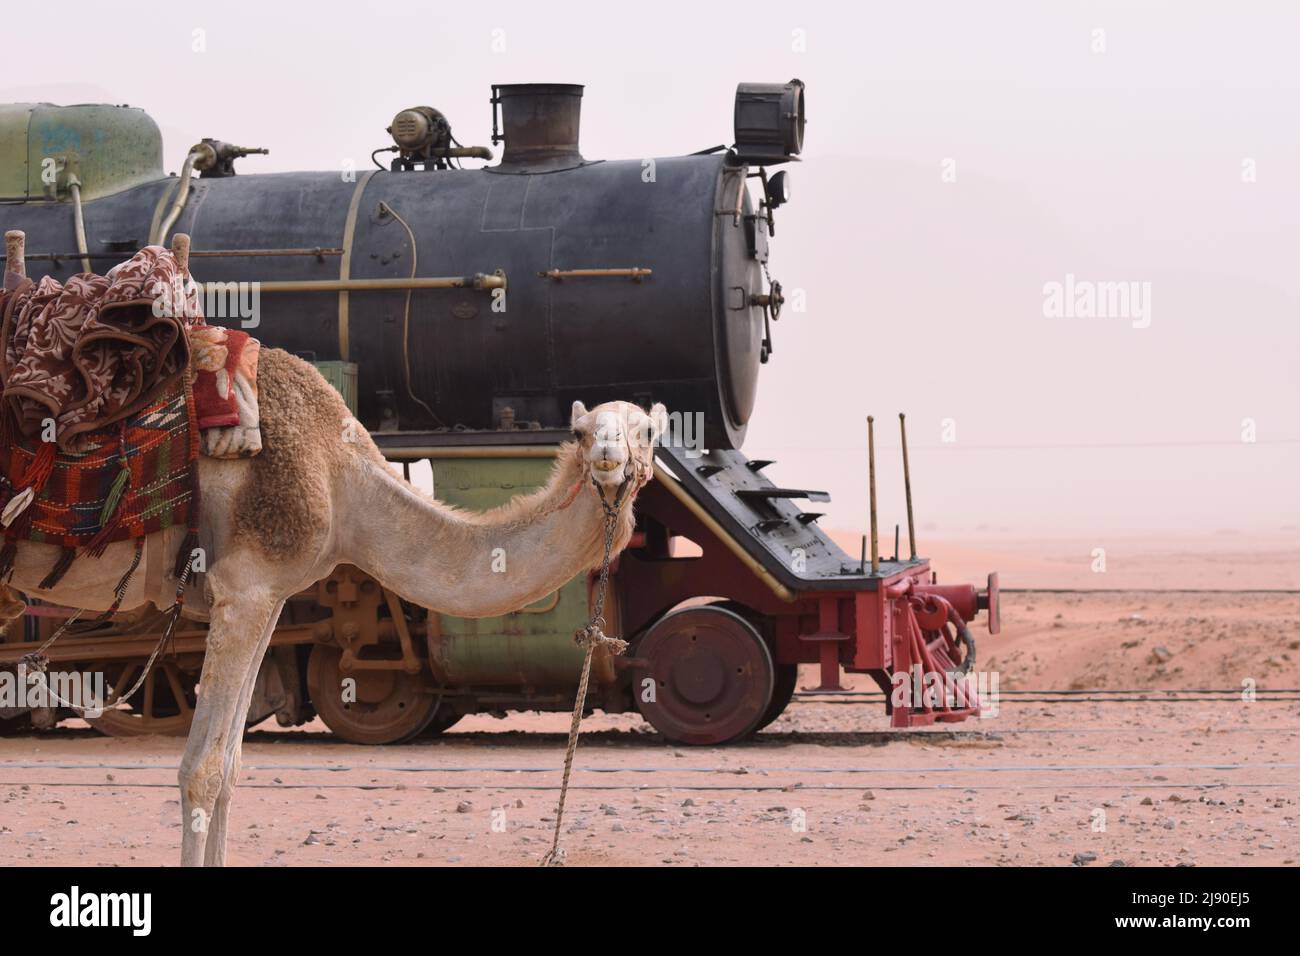 A Bedouin’s camel standing in front of a vintage steam train locomotive engine in the desert of Wadi Rum in Jordan Stock Photo